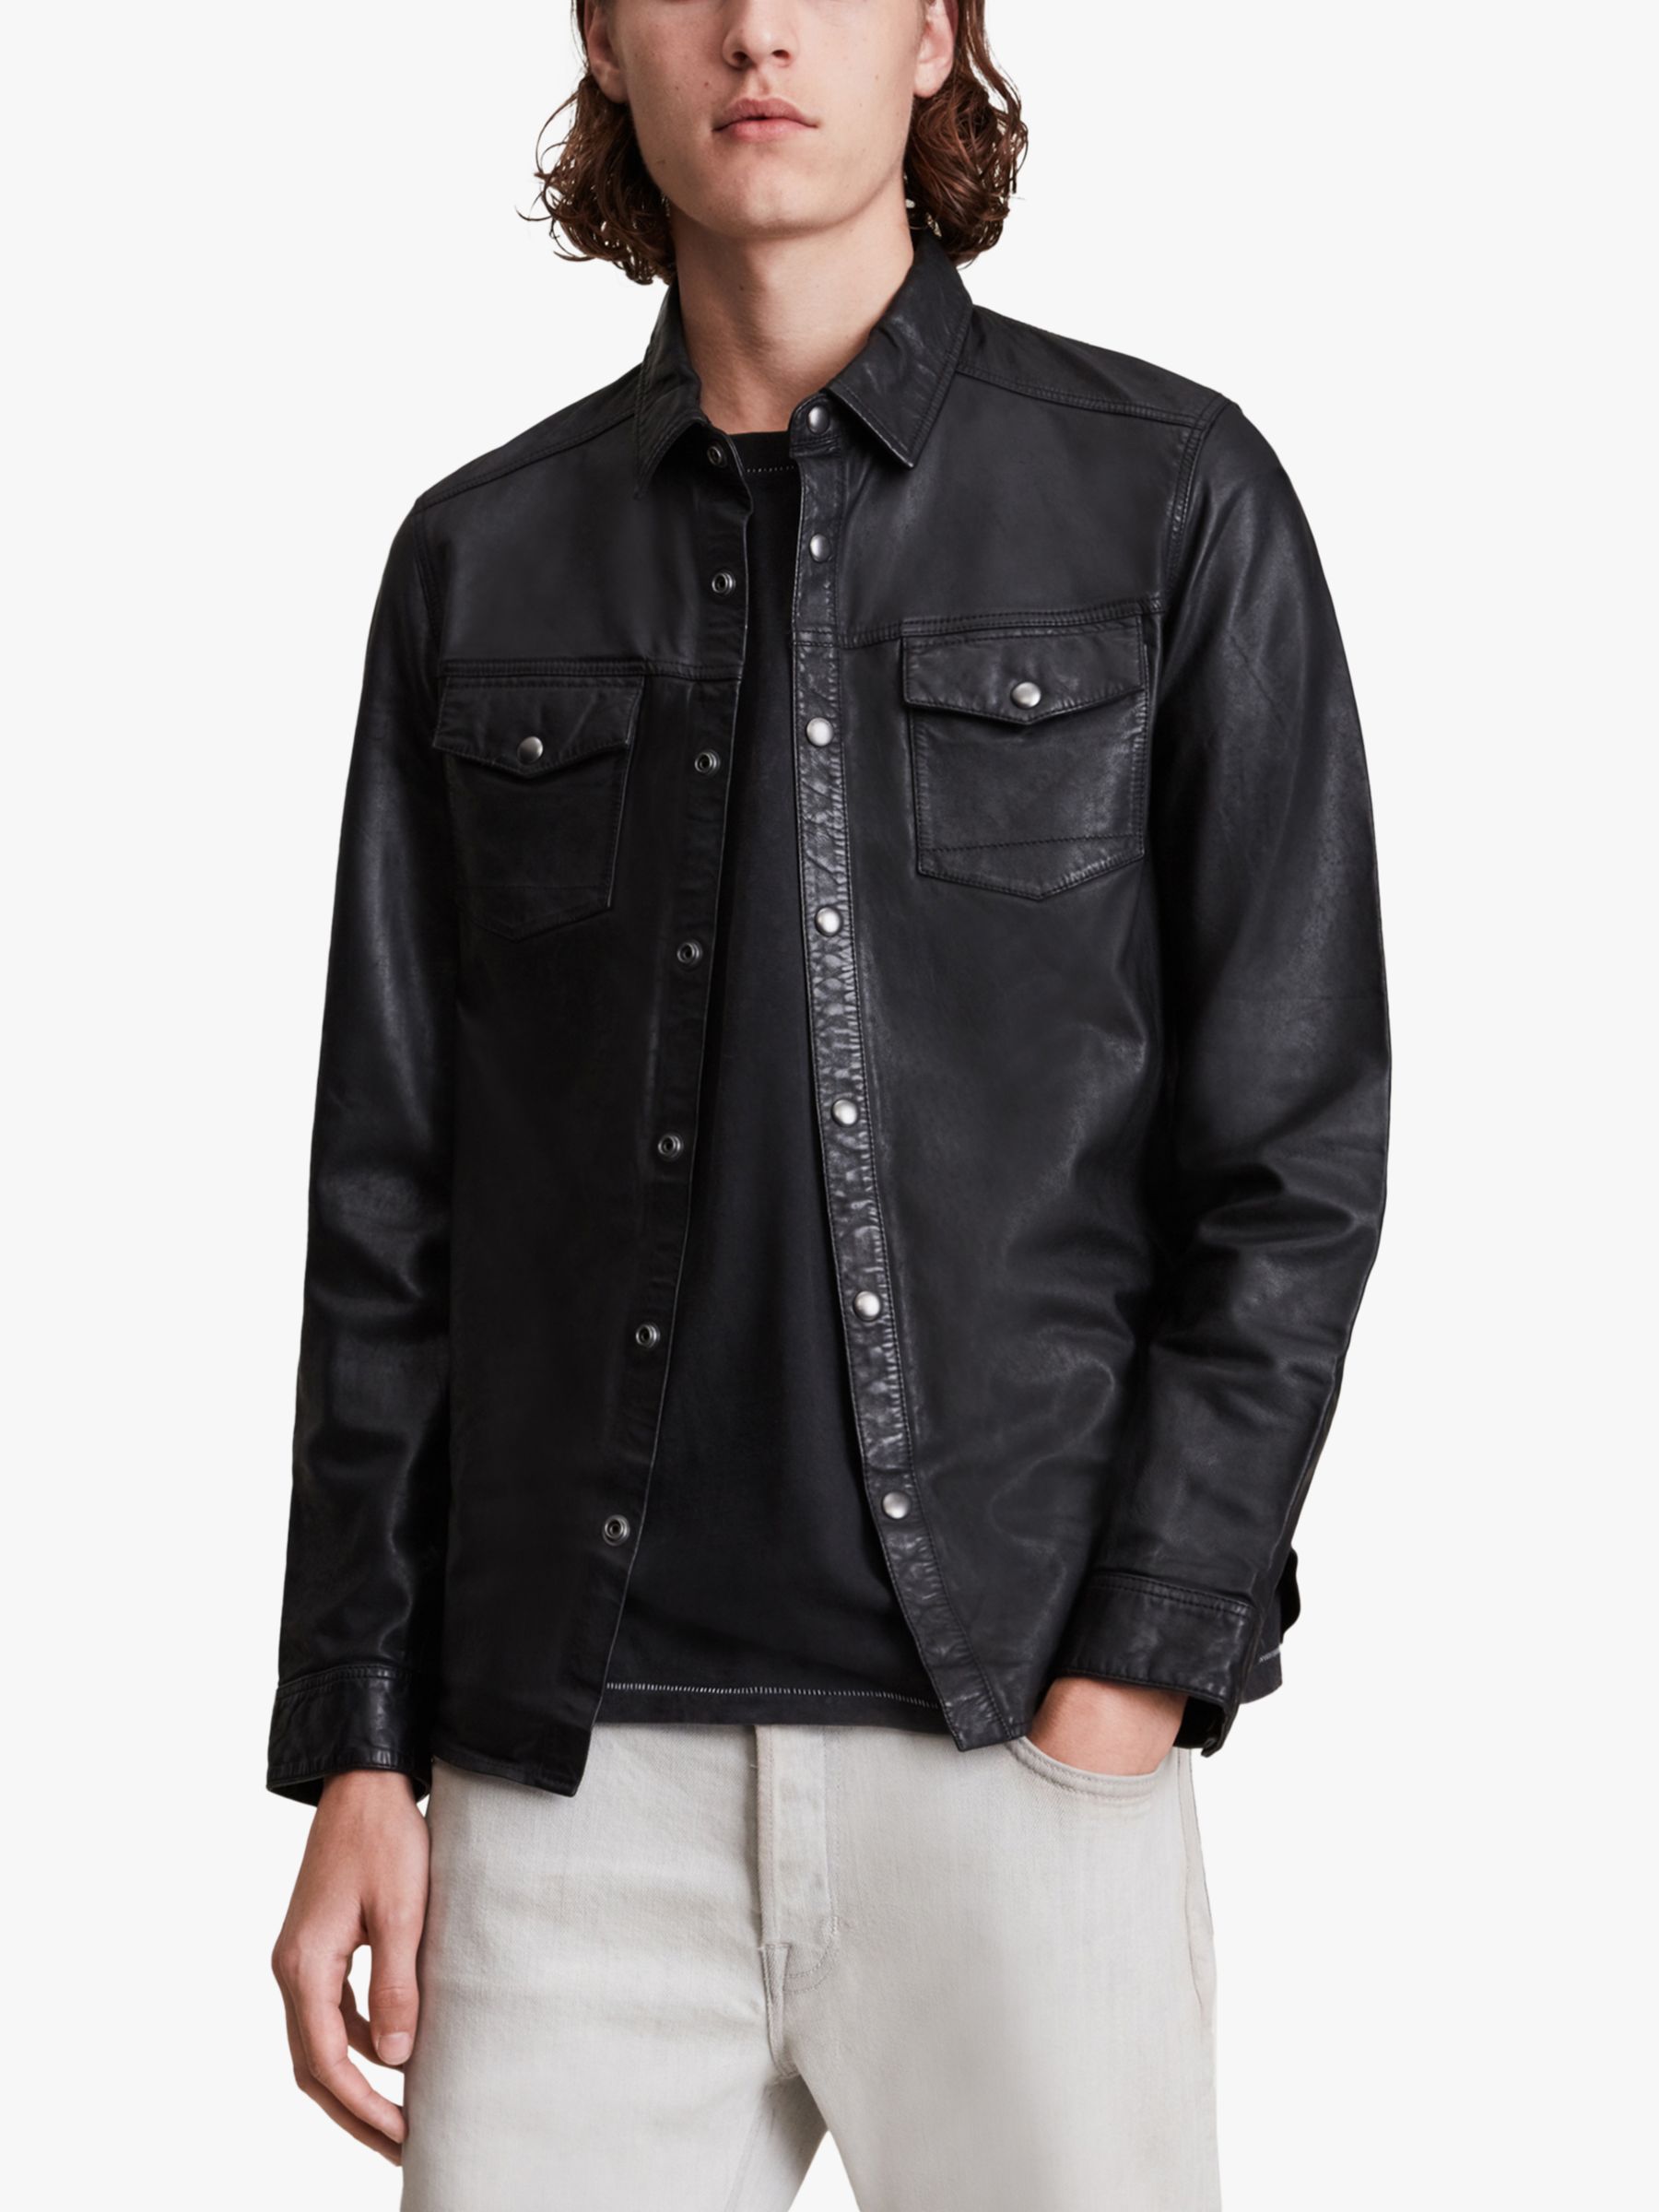 AllSaints Irwin Leather Overshirt, Black at John Lewis & Partners